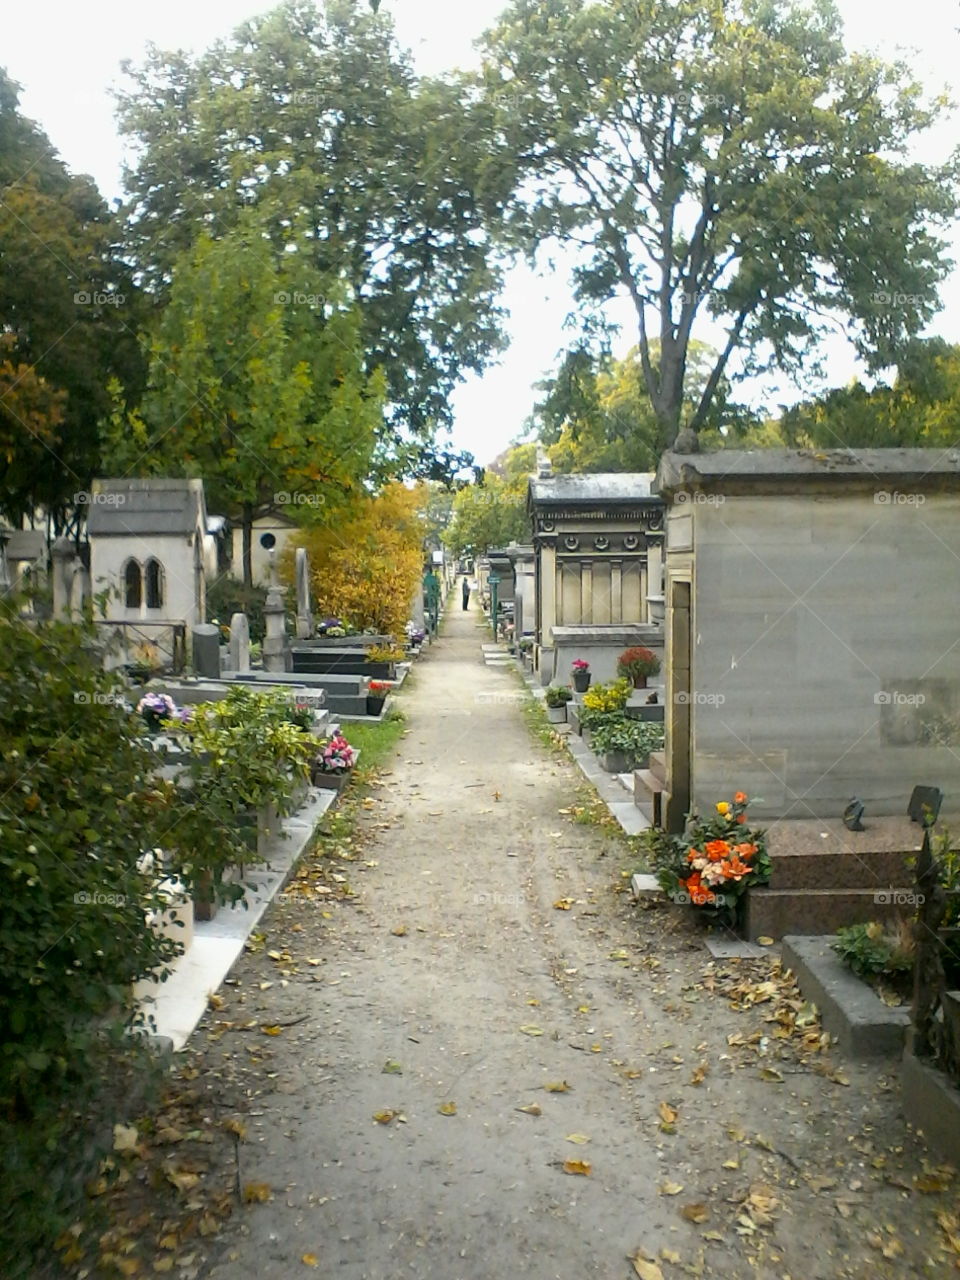 Montmartre Cemetery. The beautiful and historic Cemetière de Montmartre. Famous "residents" include Gustave Moreau and François Truffaut.